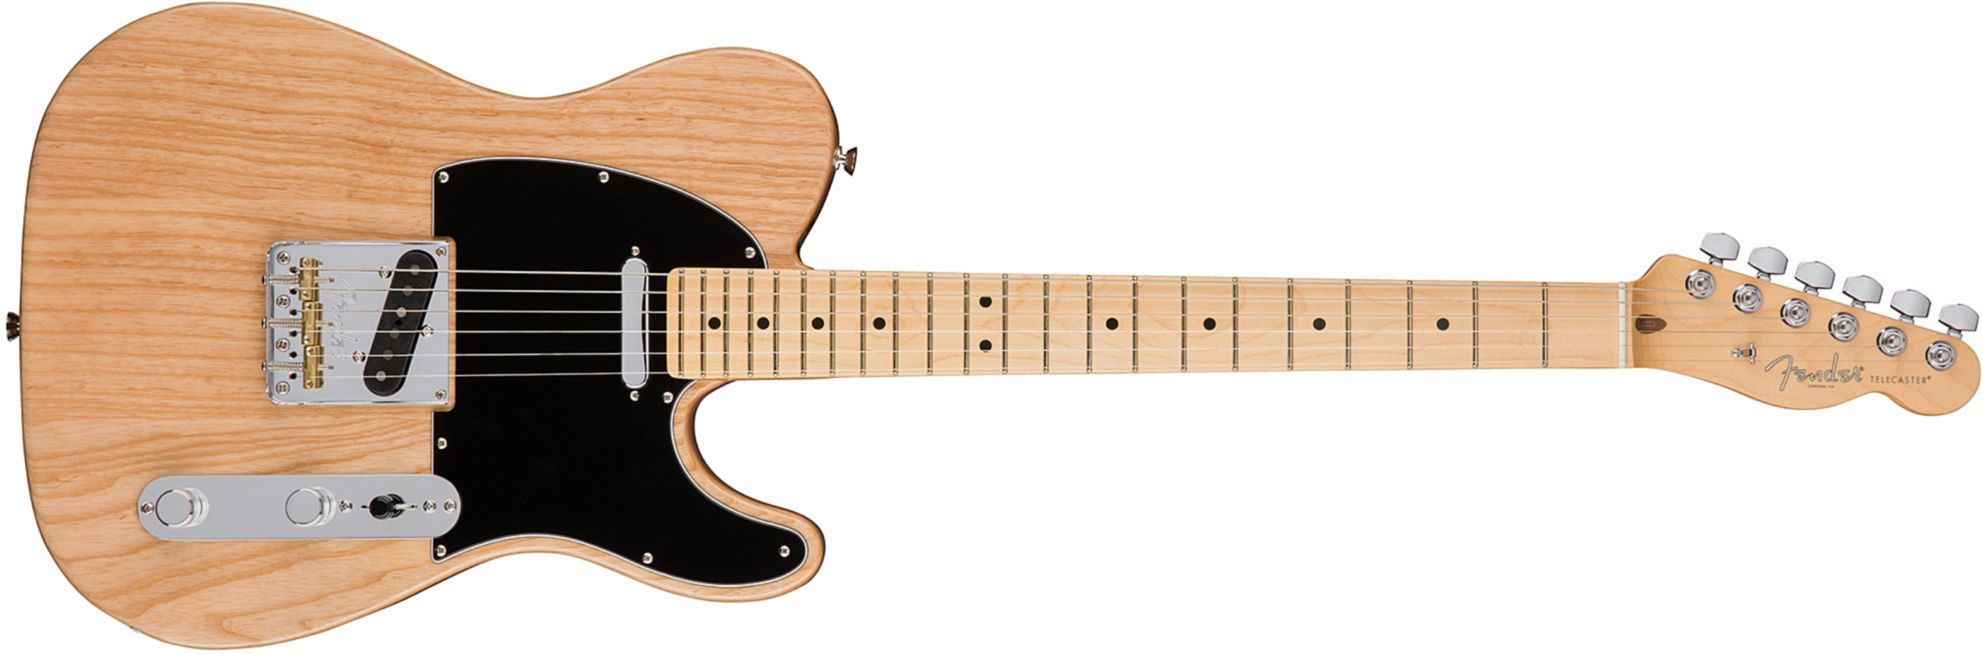 Fender Tele American Professional 2s Usa Mn - Natural - Televorm elektrische gitaar - Main picture